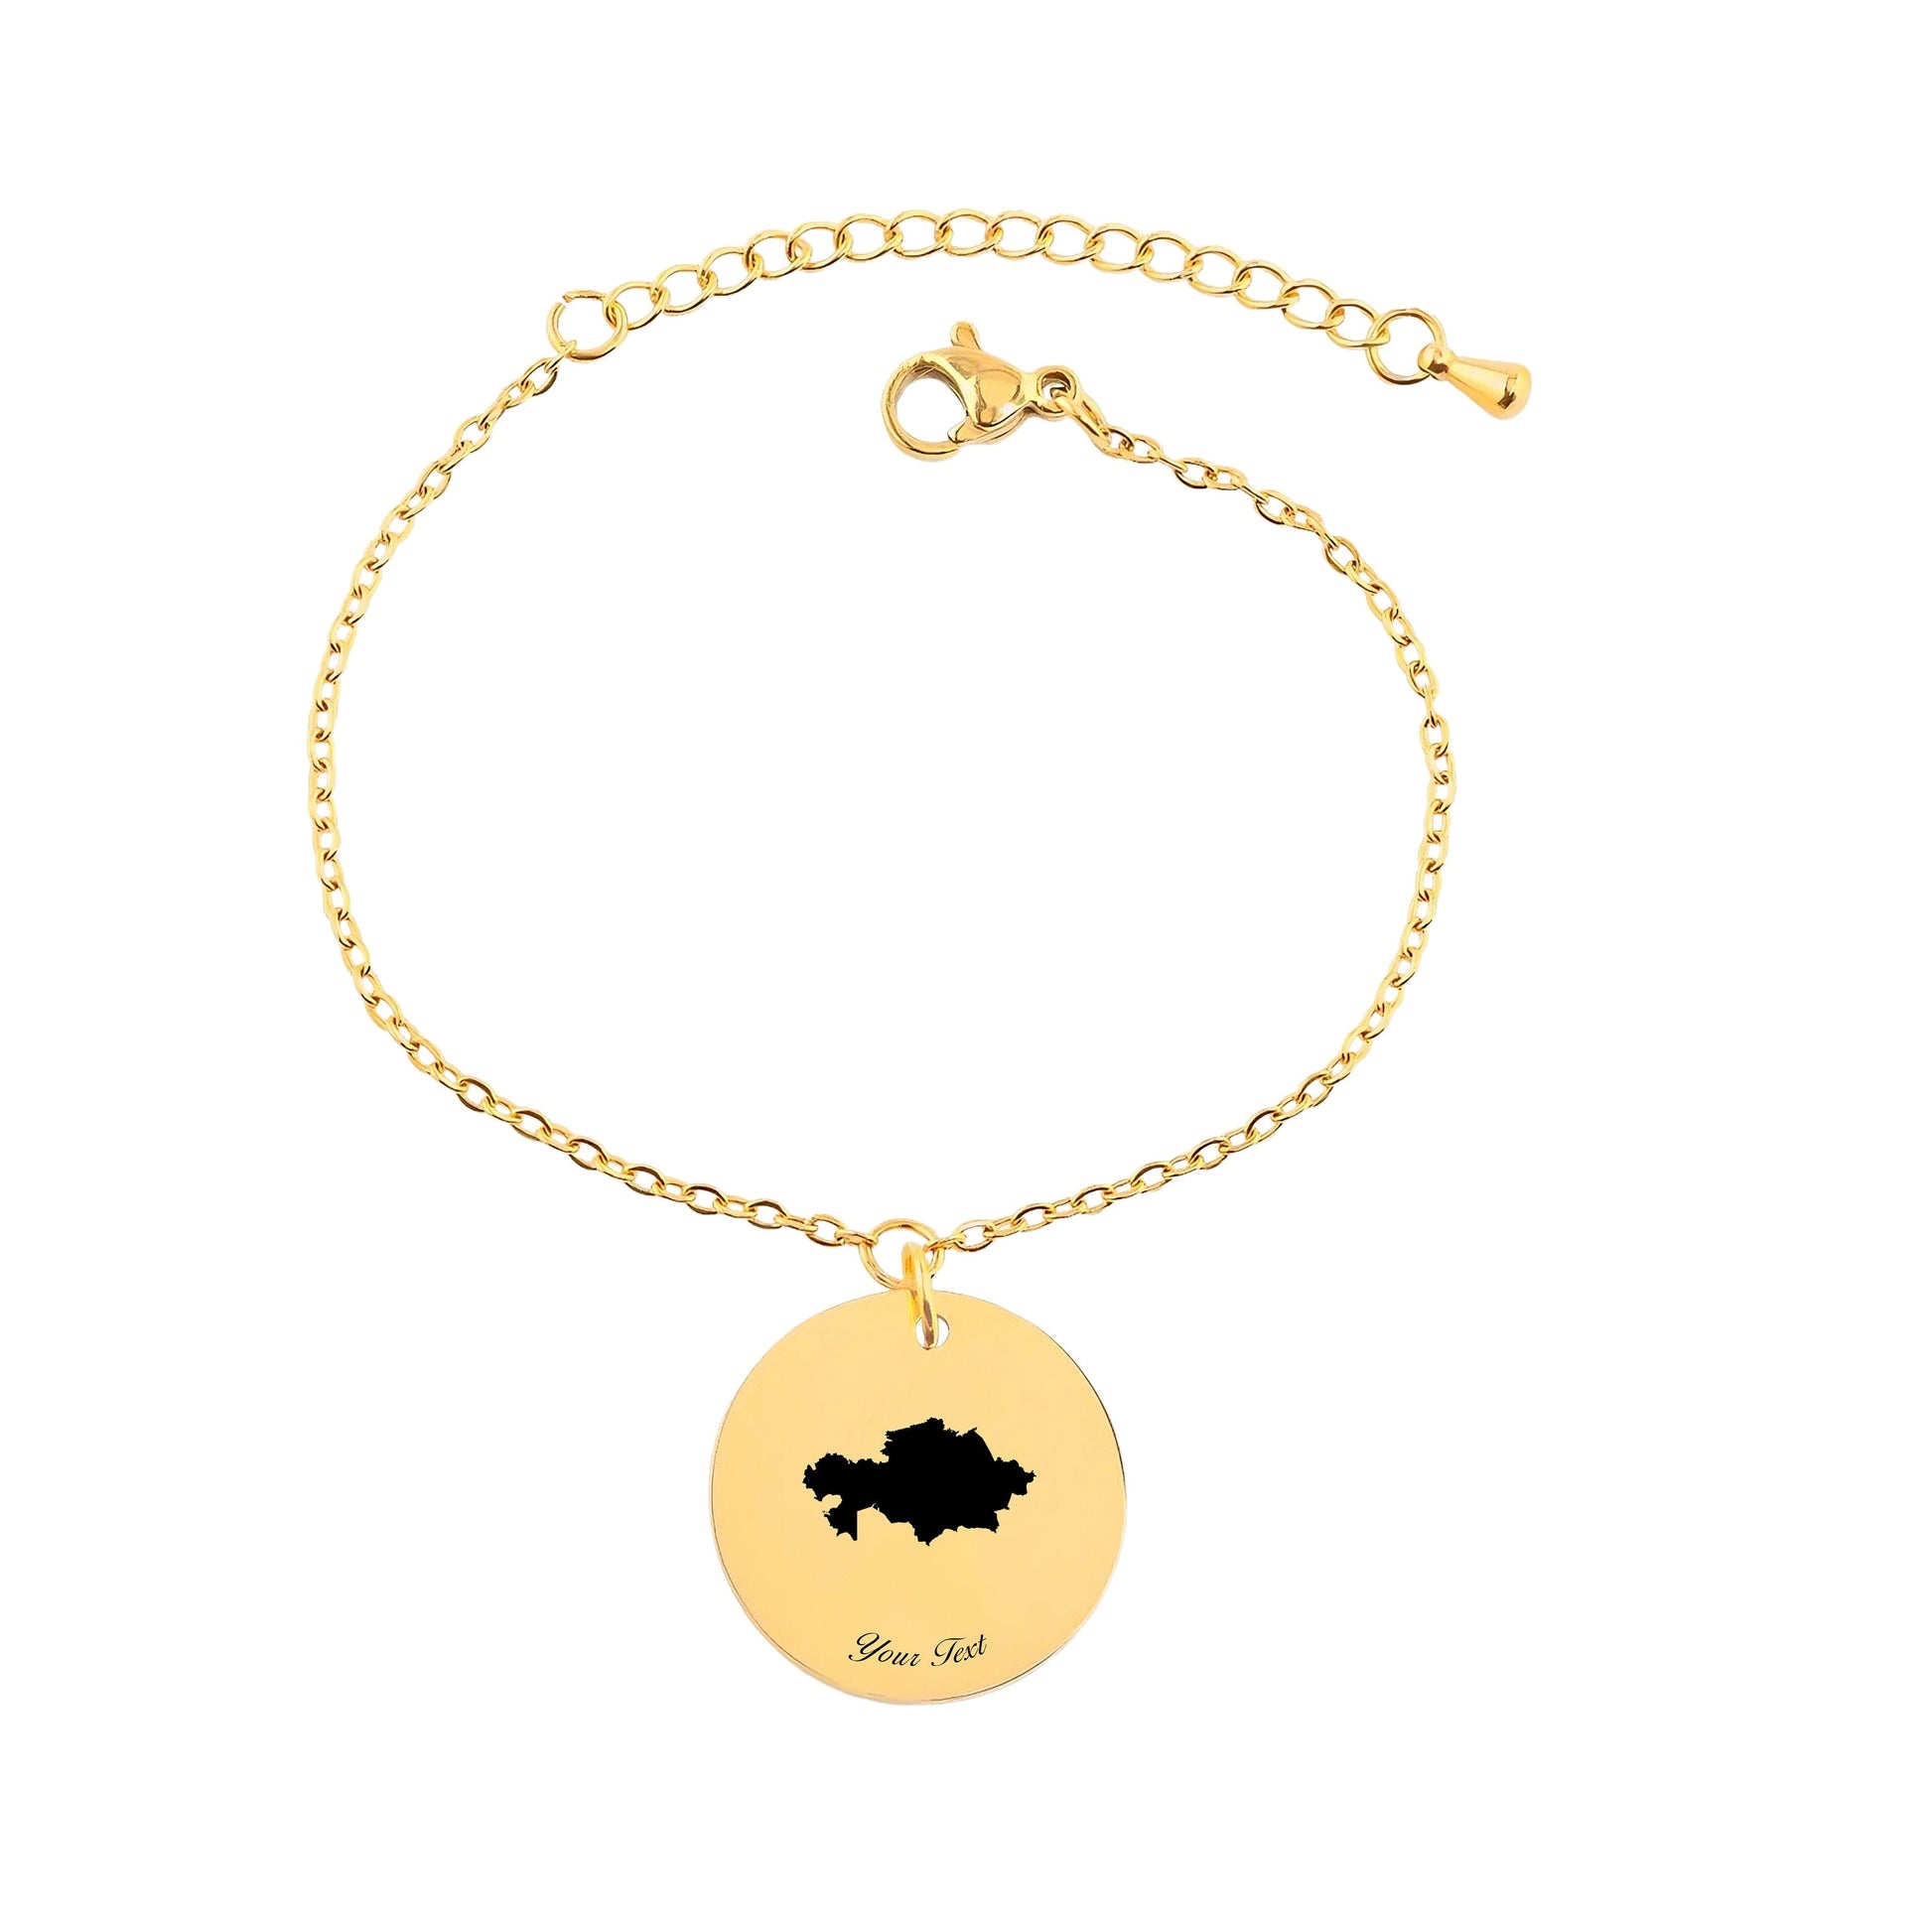 Kazakhstan Country Map Bracelet, Your Name Bracelet, Minimalist Bracelet, Personalized Gift, 14K Gold Bracelet, Gift For Him Her